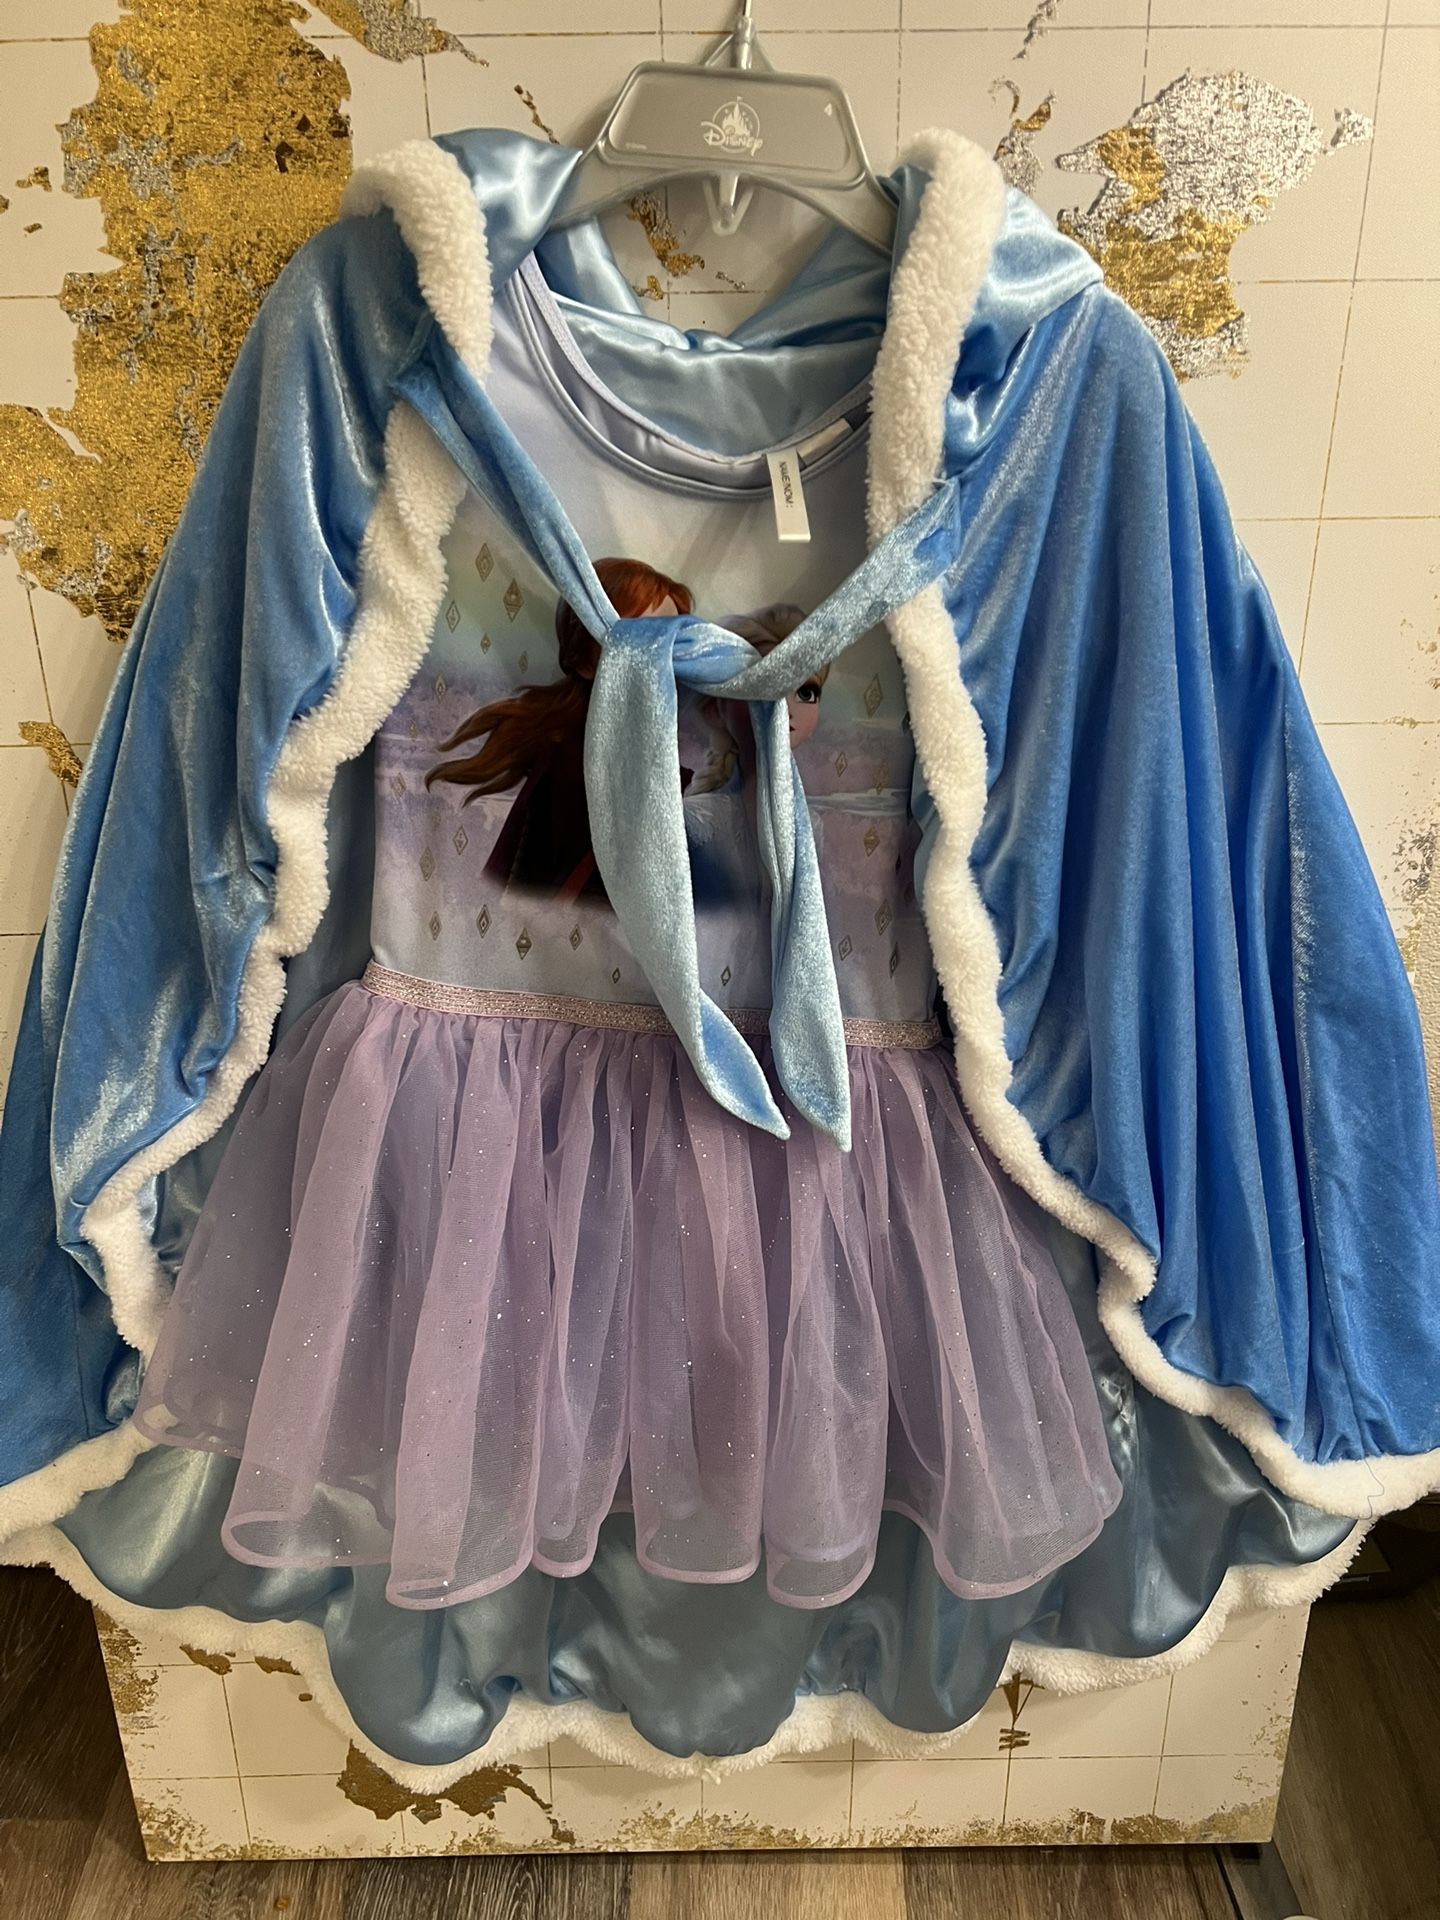 Frozen dress and cape 